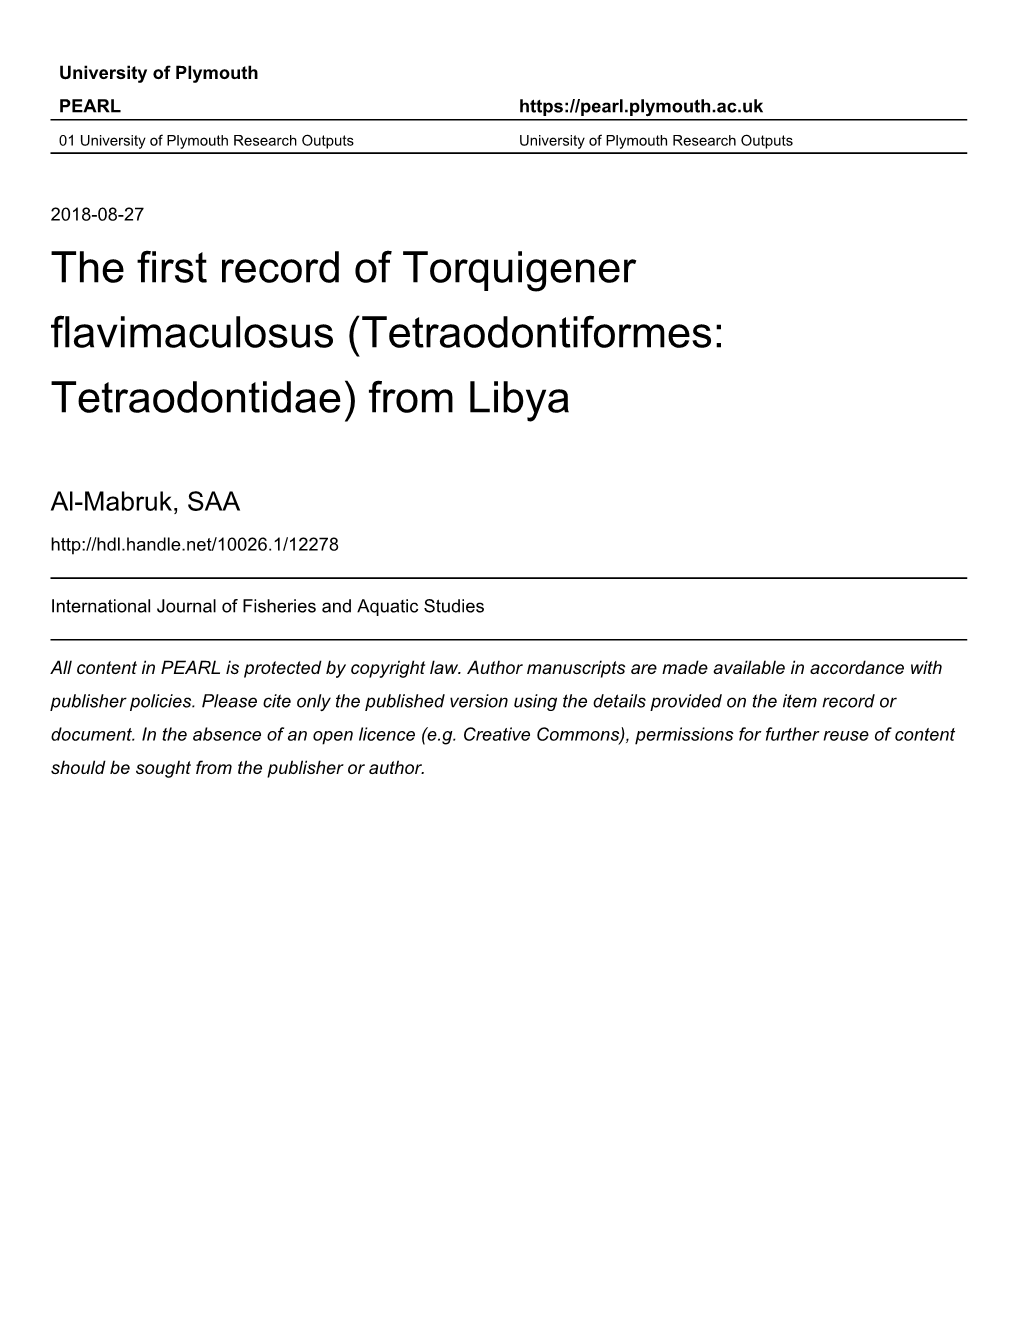 The First Record of Torquigener Flavimaculosus (Tetraodontiformes: Tetraodontidae) from Libya